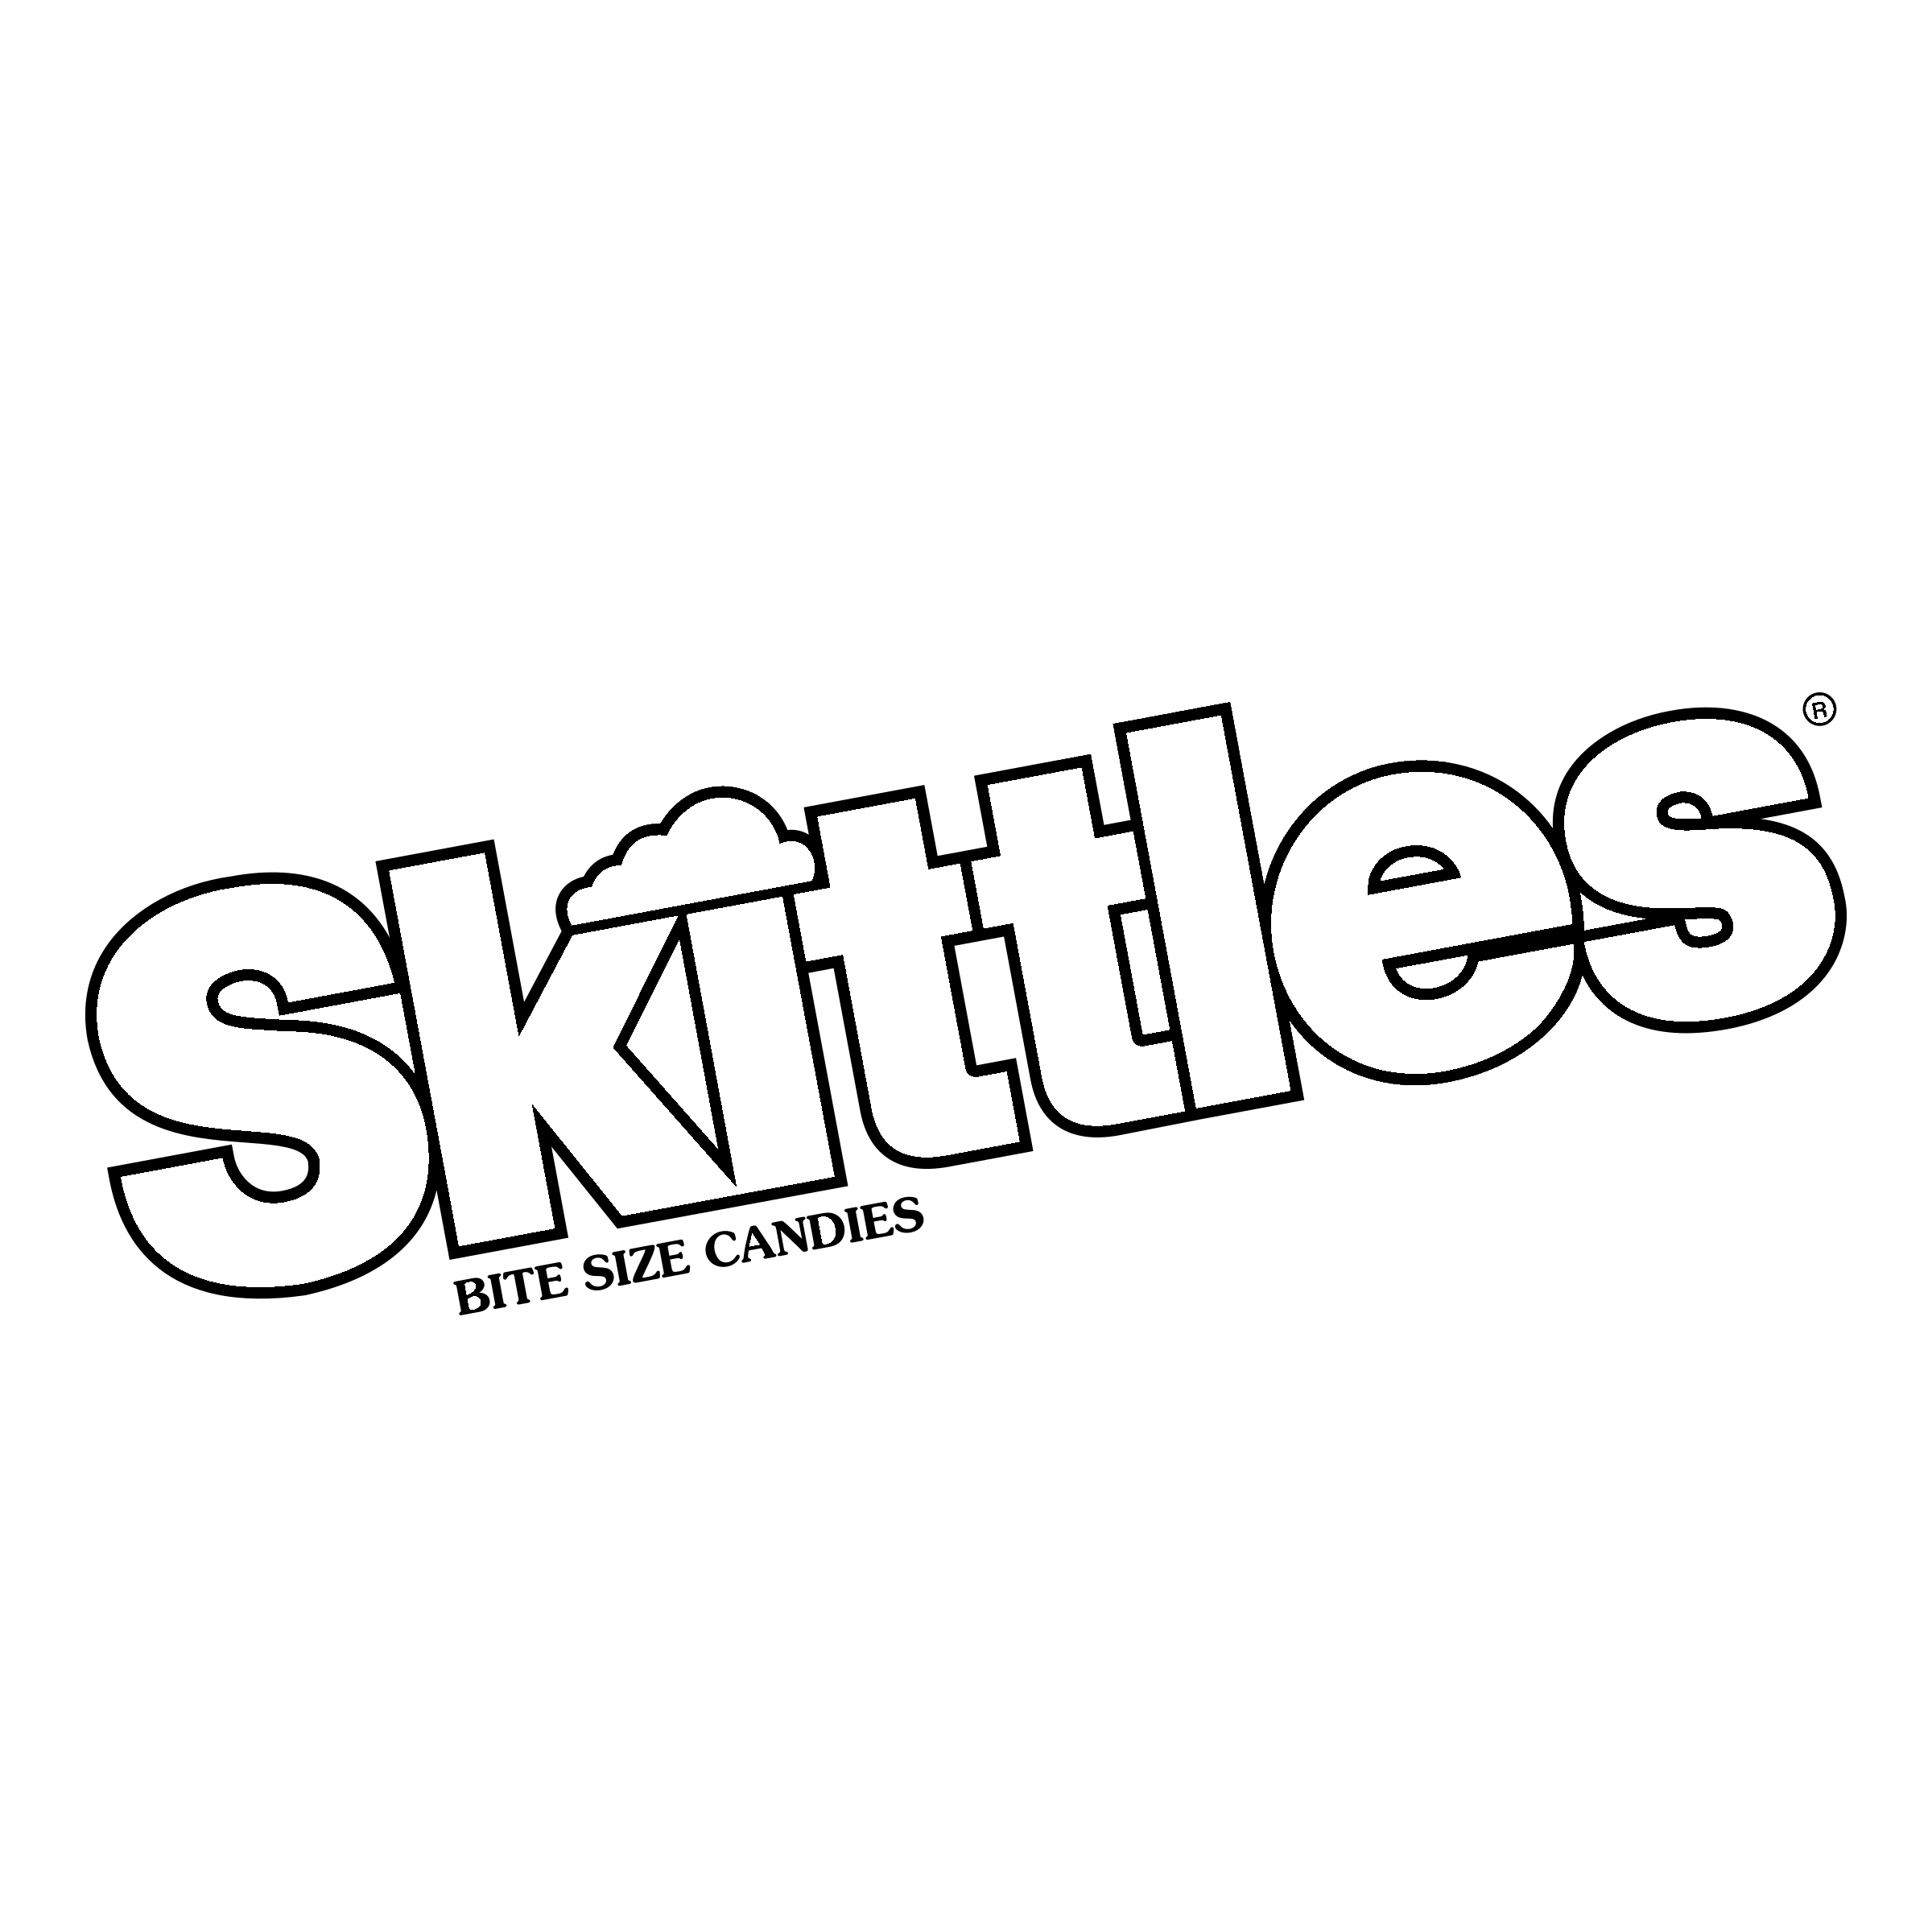 Skittles Logo PNG Transparent & SVG Vector - Freebie Supply